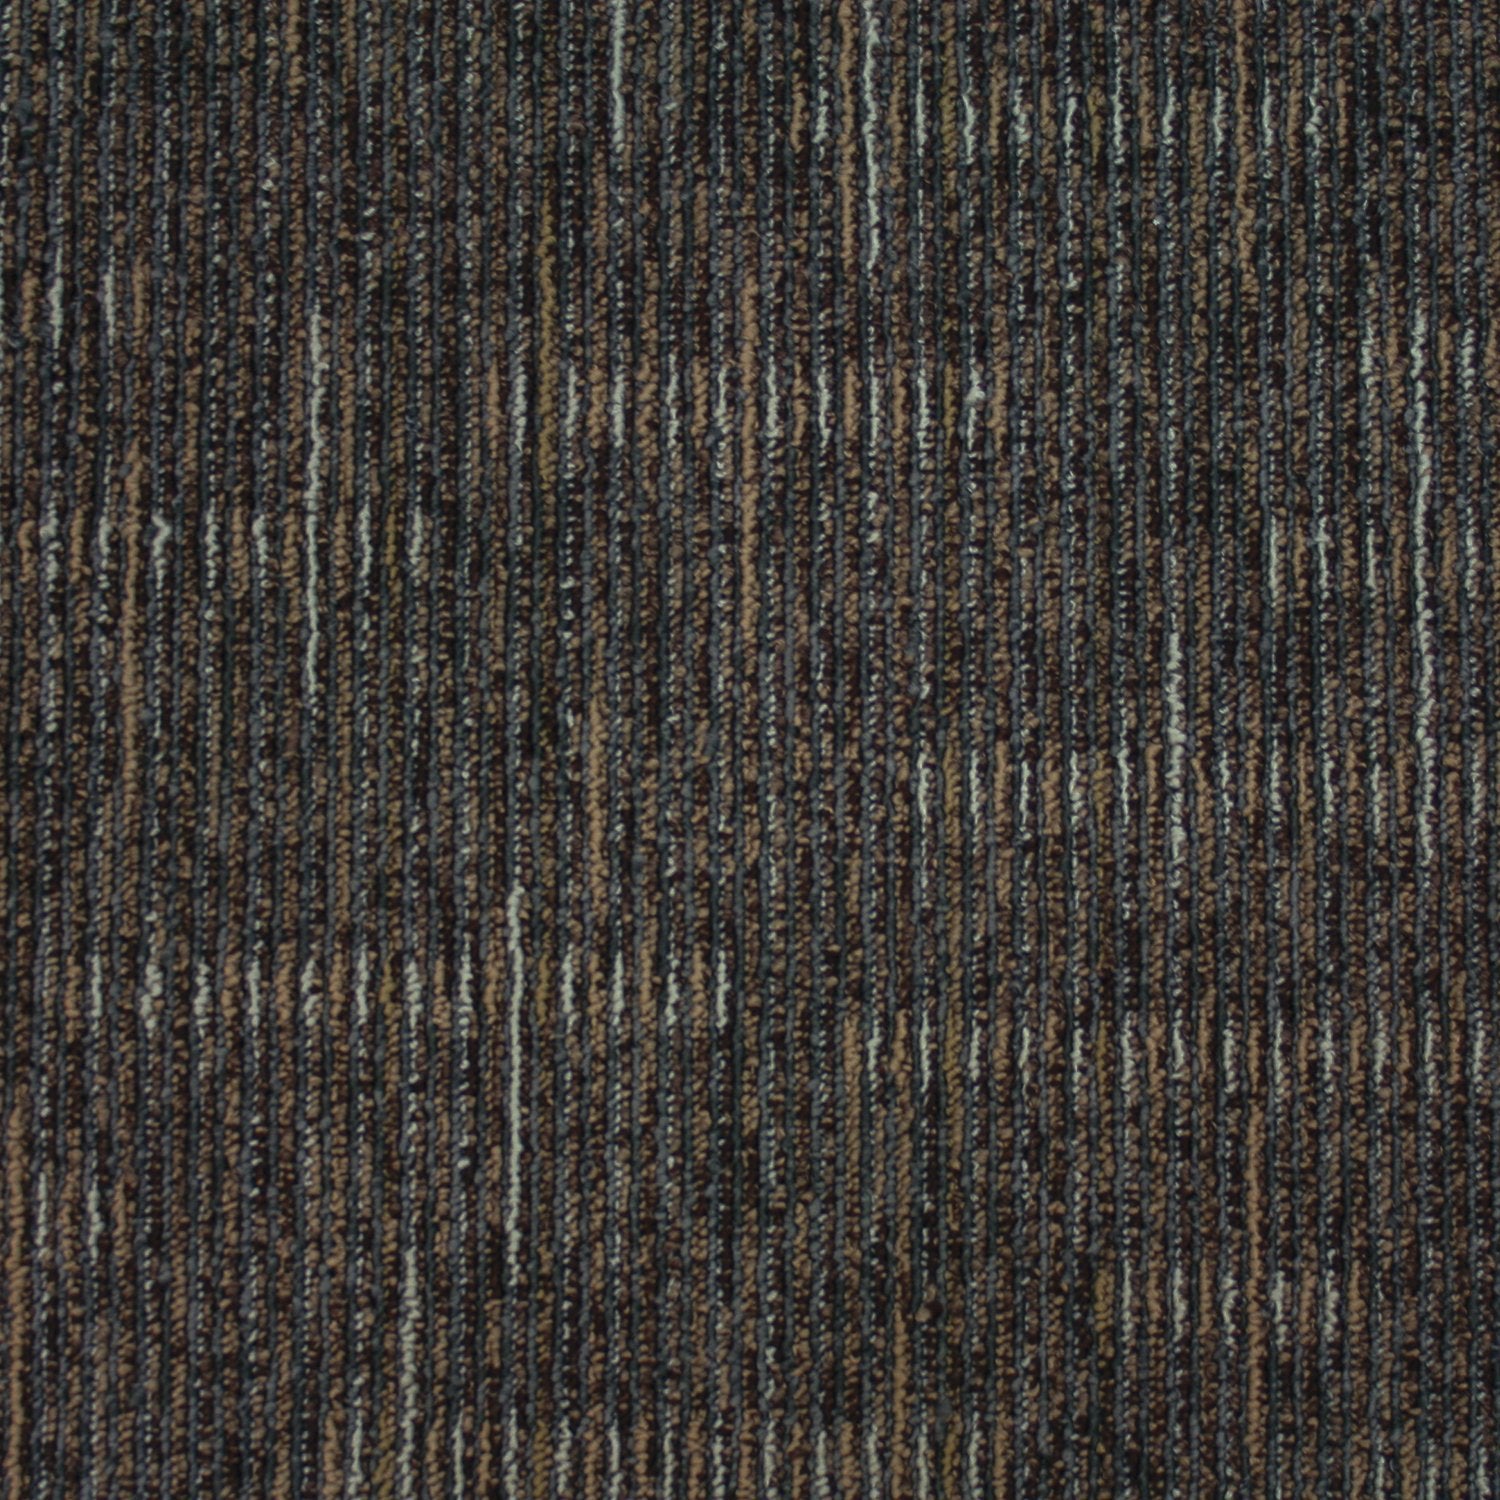 Kraus Carpet Tile Perspective Scale 724005 Sample